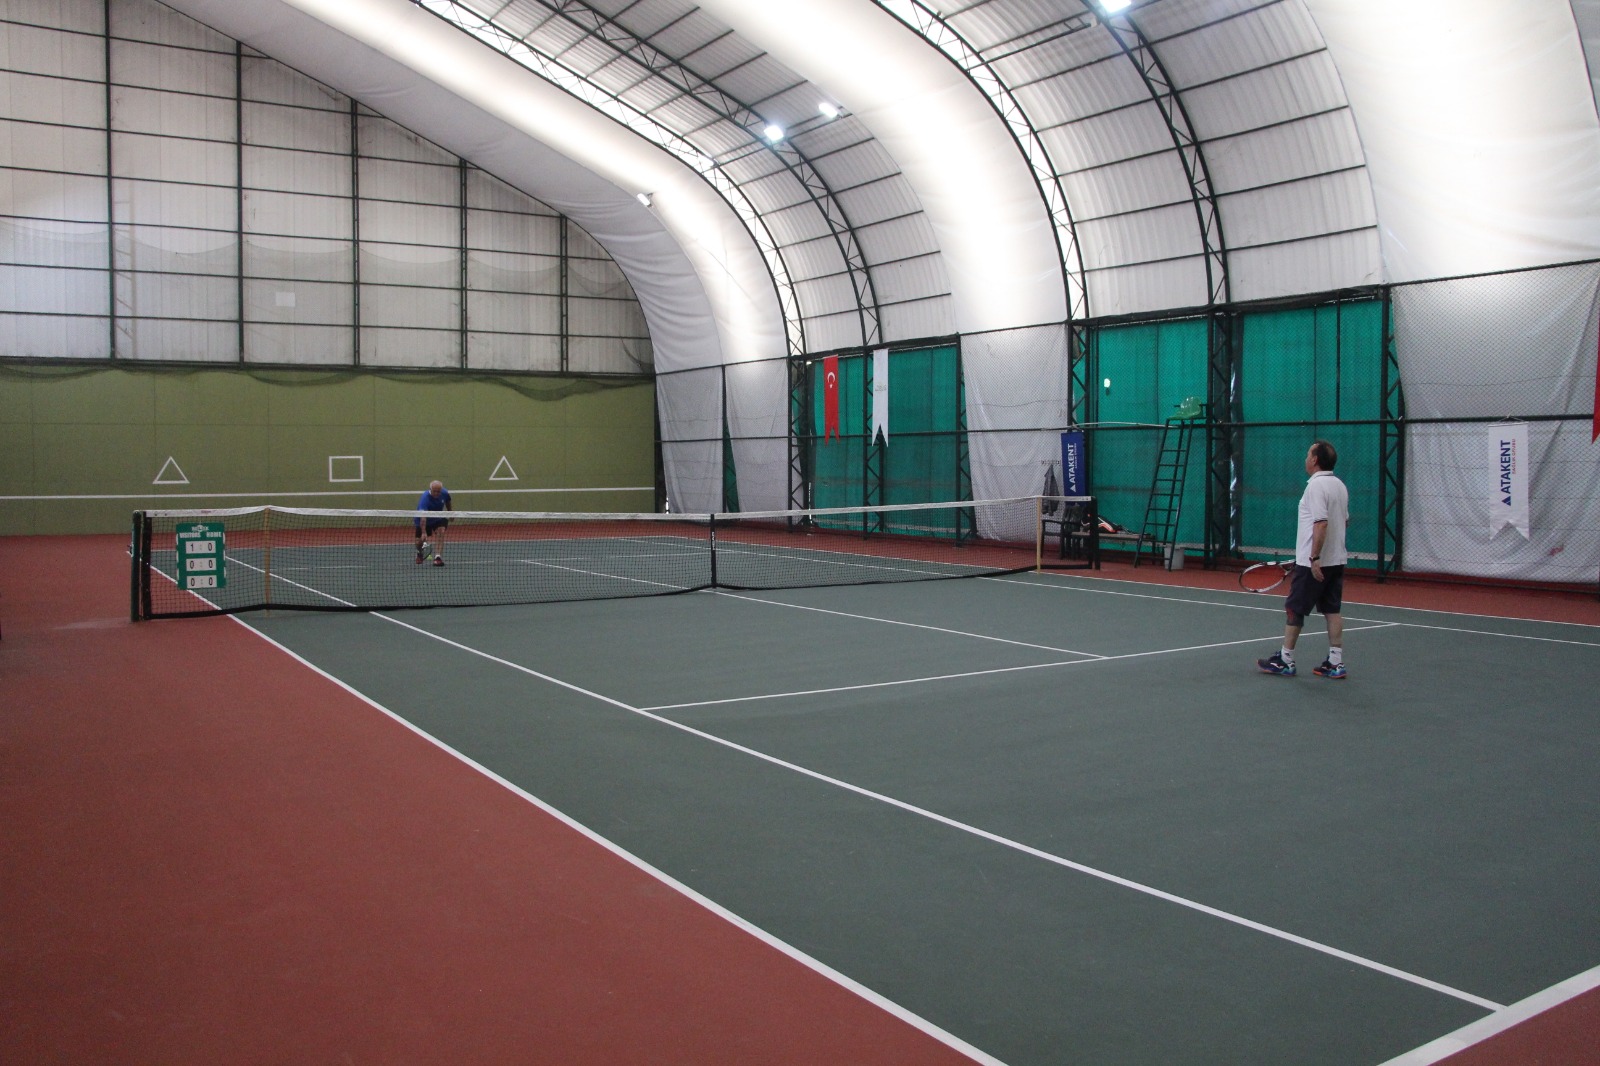 Yalova Tenis Spor Haber Gazete Manset Baskan Roportaj (6)